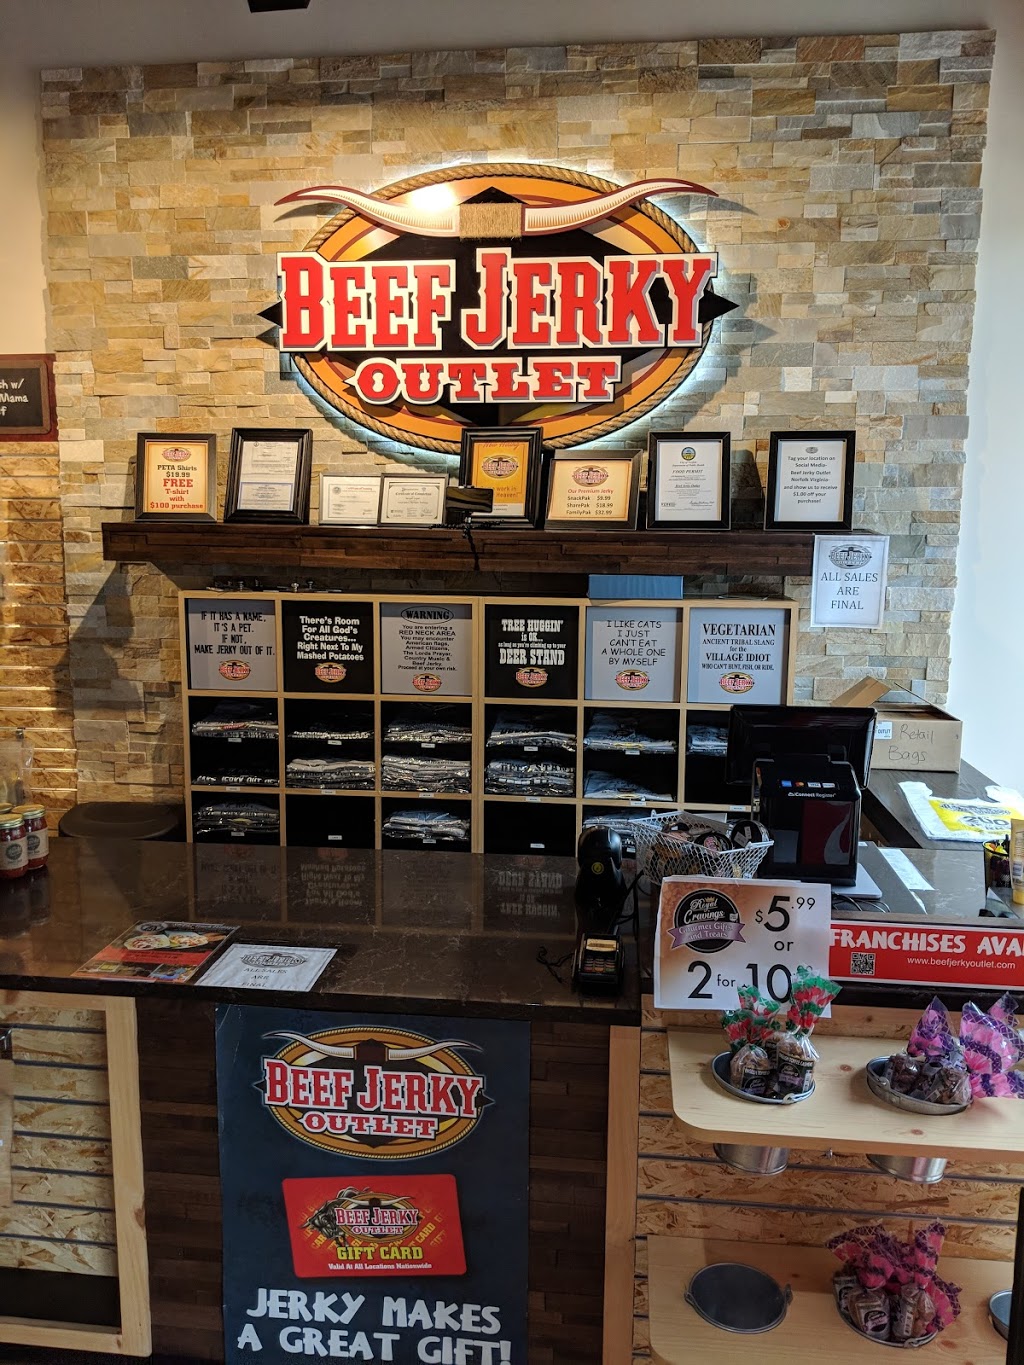 Beef Jerky Outlet | 1600 Premium Outlets Blvd #608, Norfolk, VA 23502 | Phone: (757) 389-7601